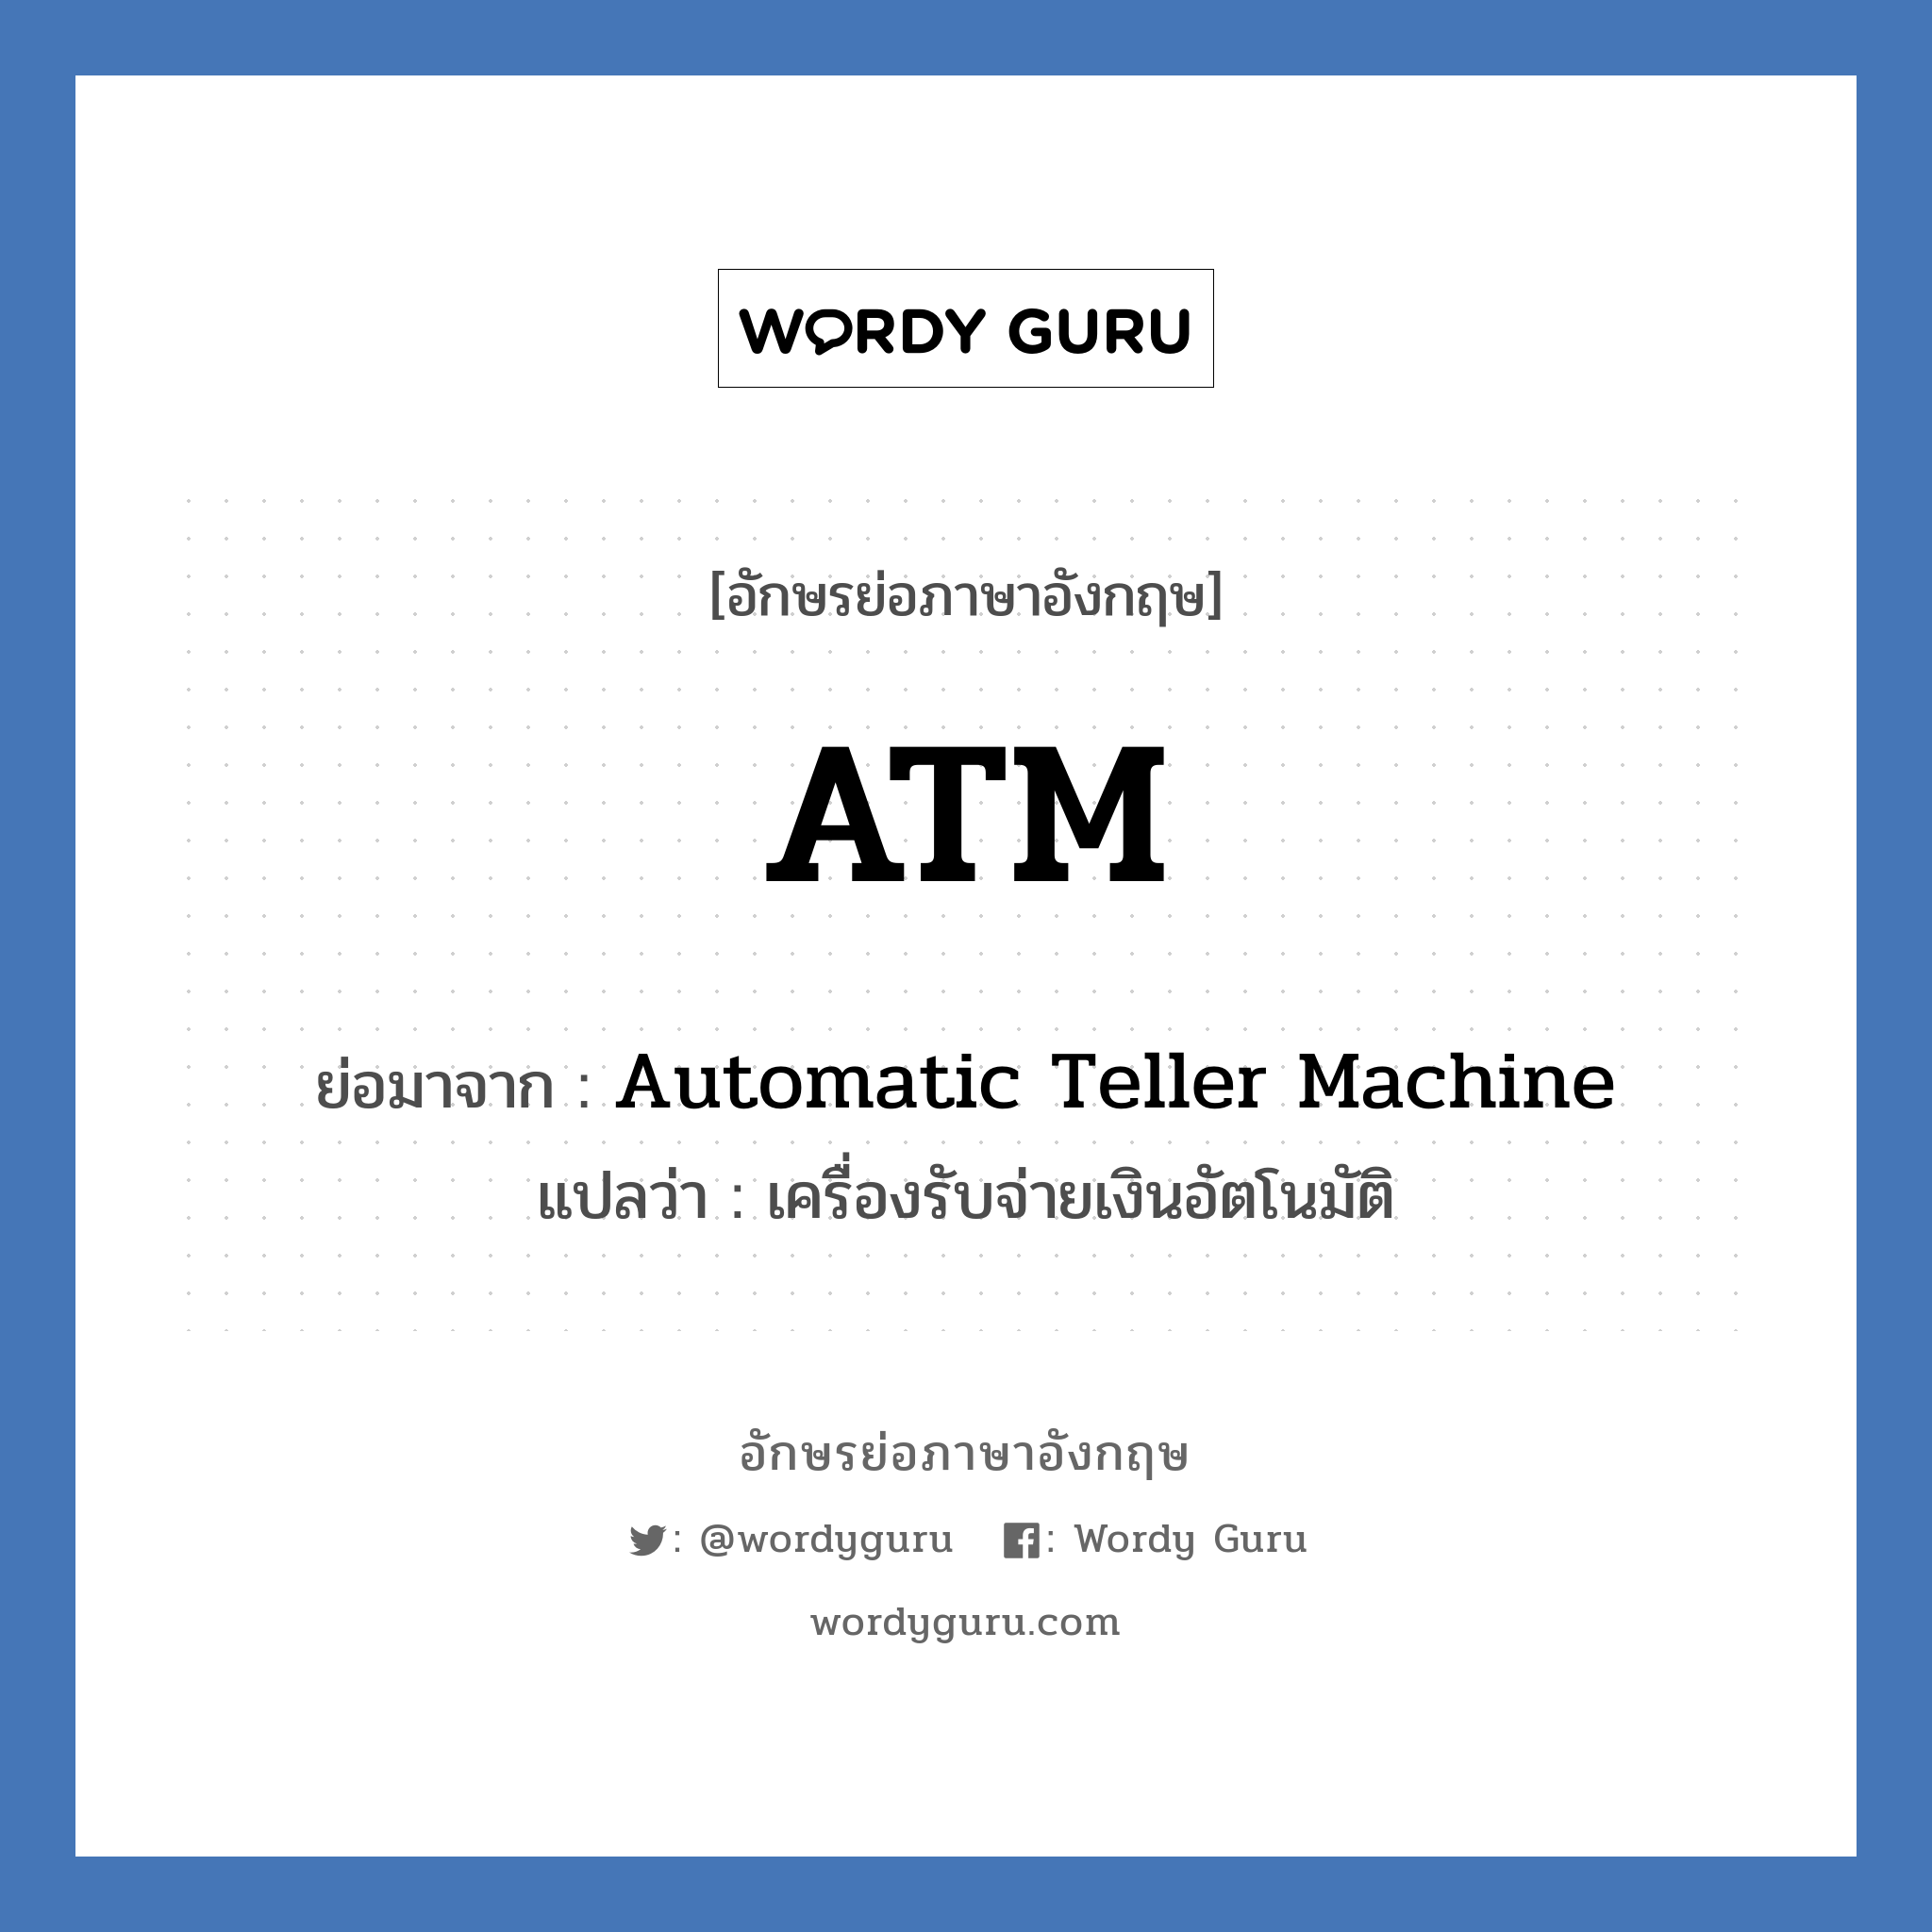 Automatic Teller Machine คำย่อคือ? แปลว่า?, อักษรย่อภาษาอังกฤษ Automatic Teller Machine ย่อมาจาก ATM แปลว่า เครื่องรับจ่ายเงินอัตโนมัติ